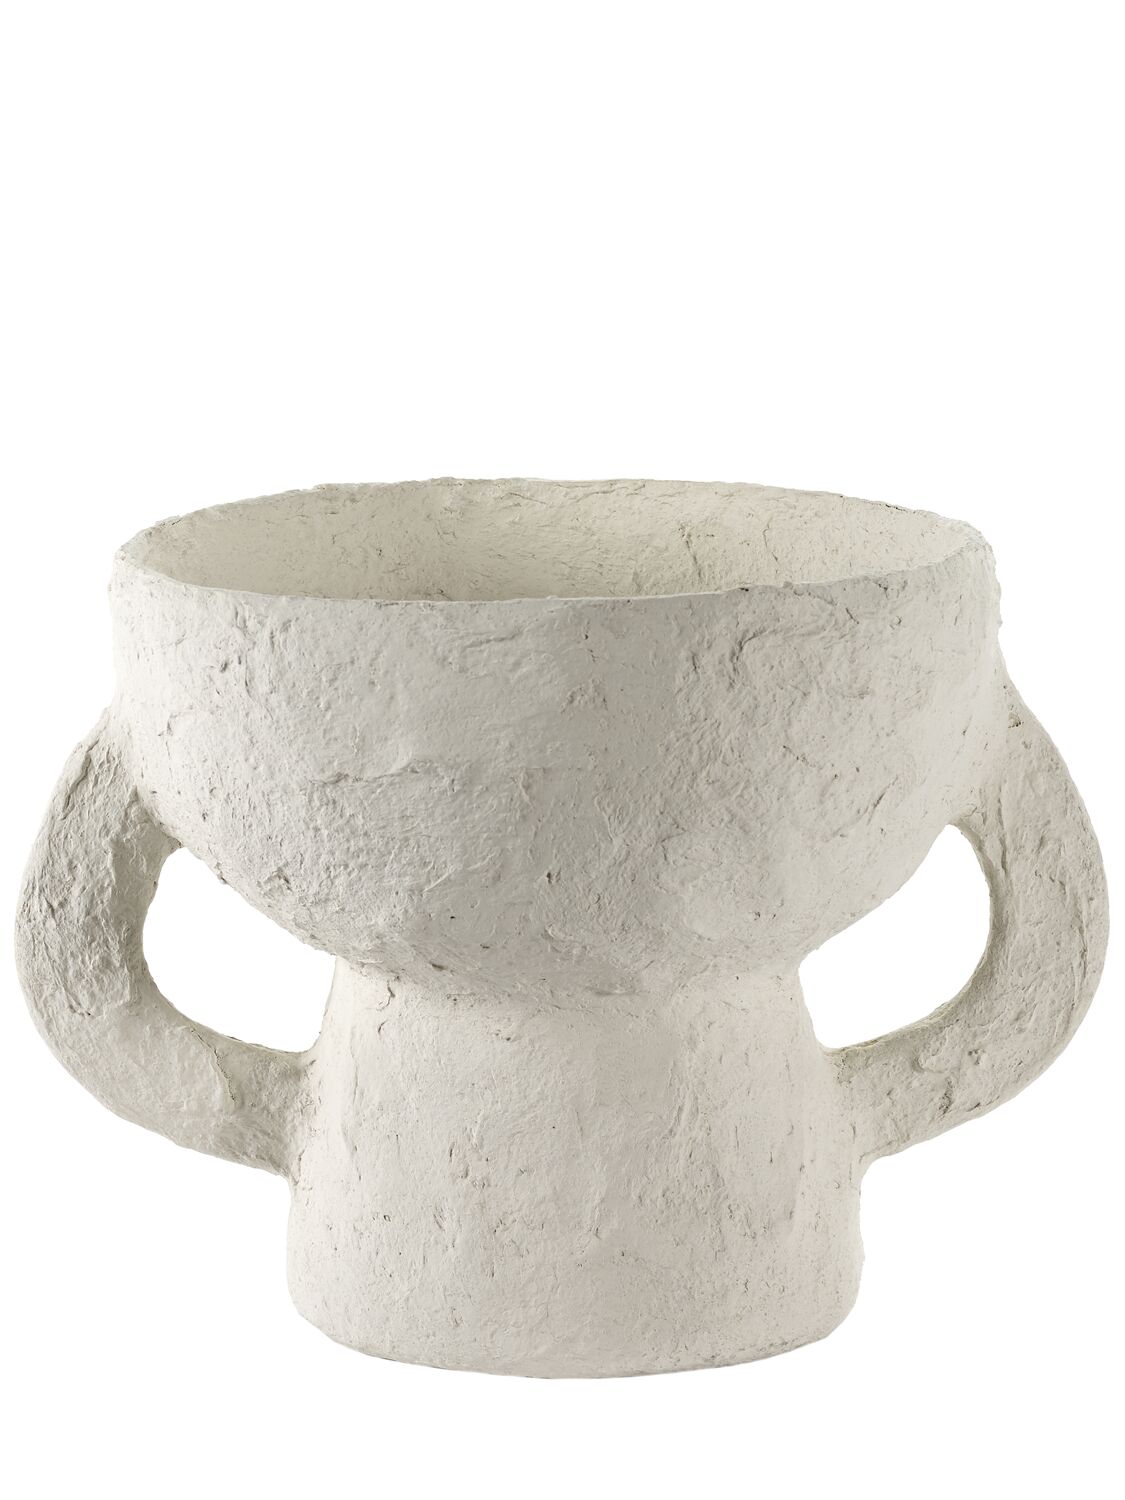 Serax White Earth Vase